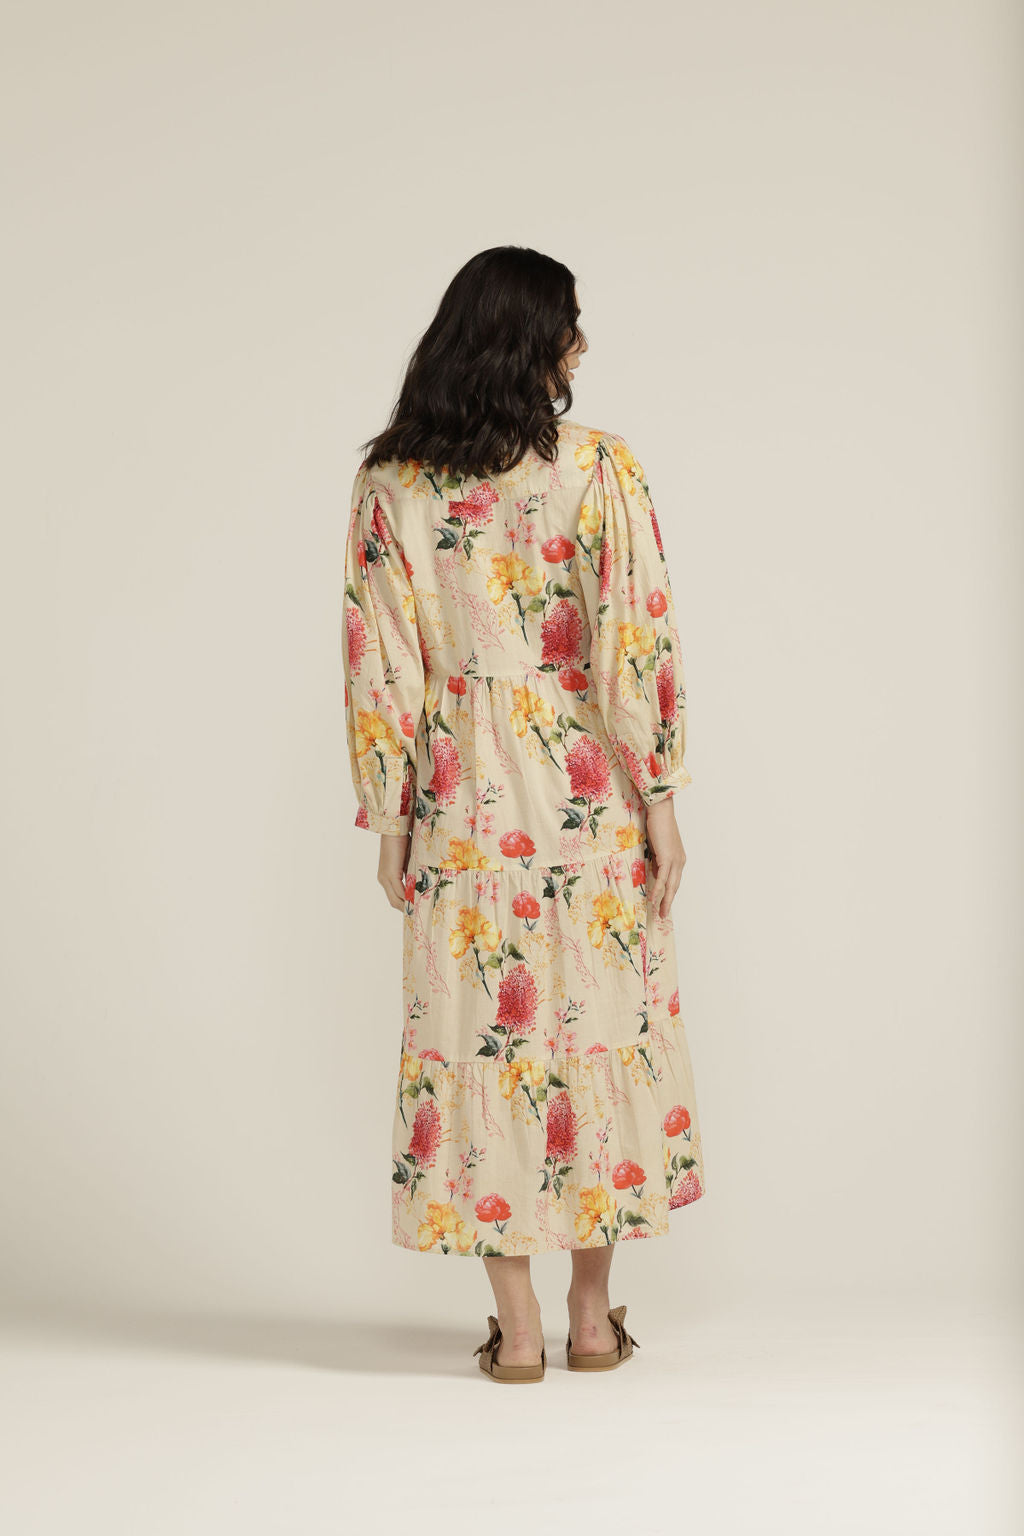 Cotton Soft Floral Dress - Goondiwindi - Beechworth Emporium